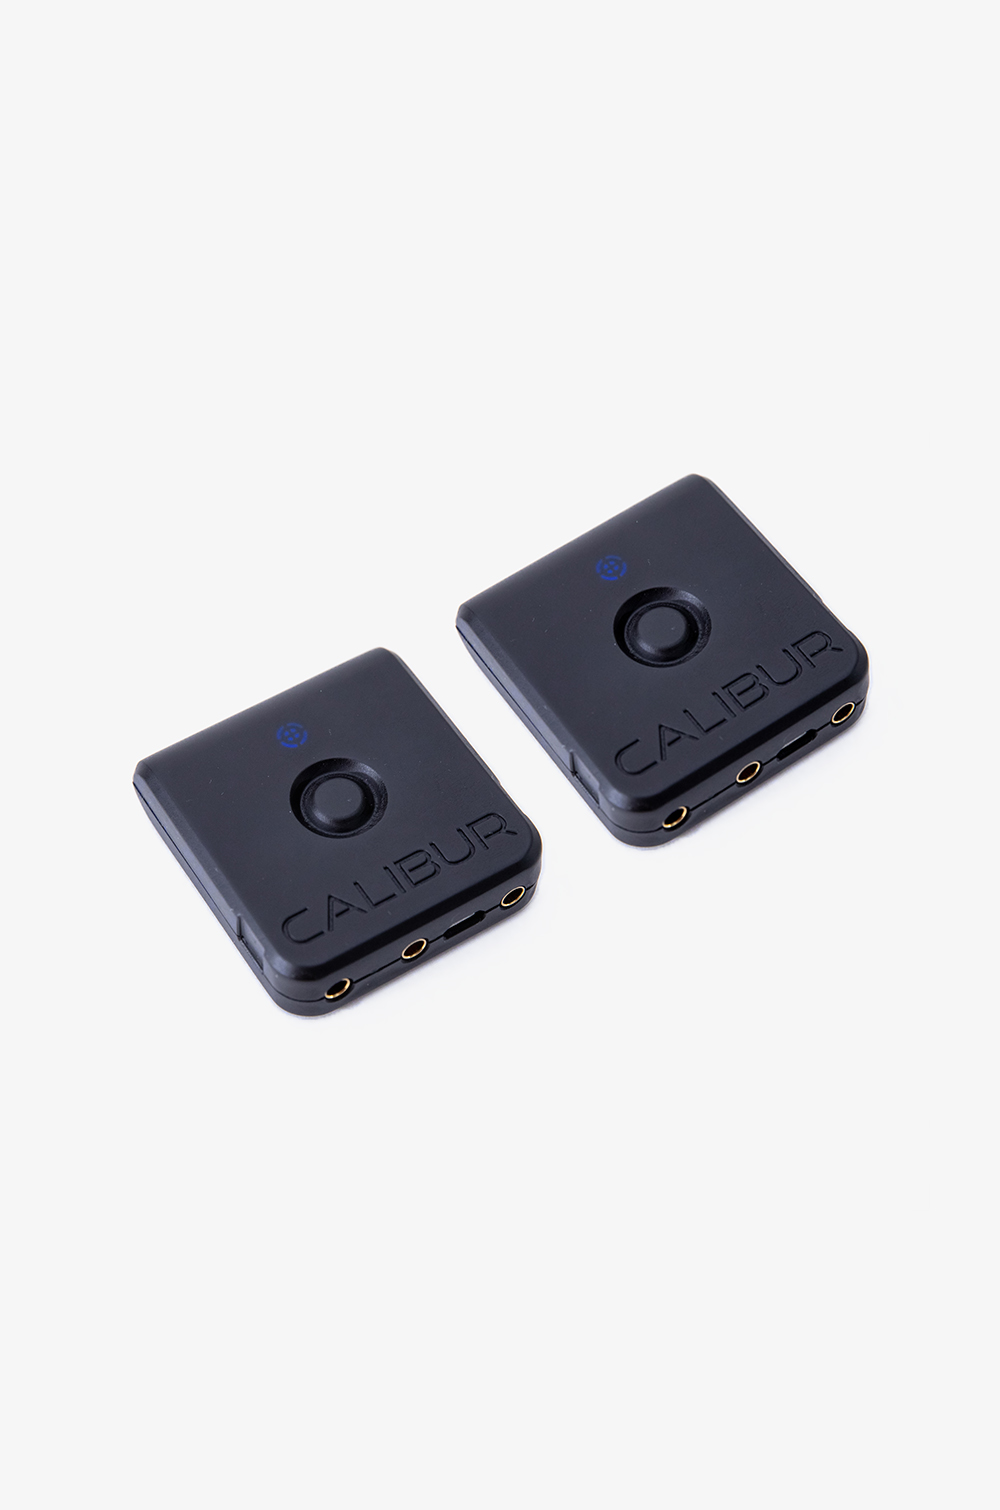 Calibur Wireless Pocket Box (pair)